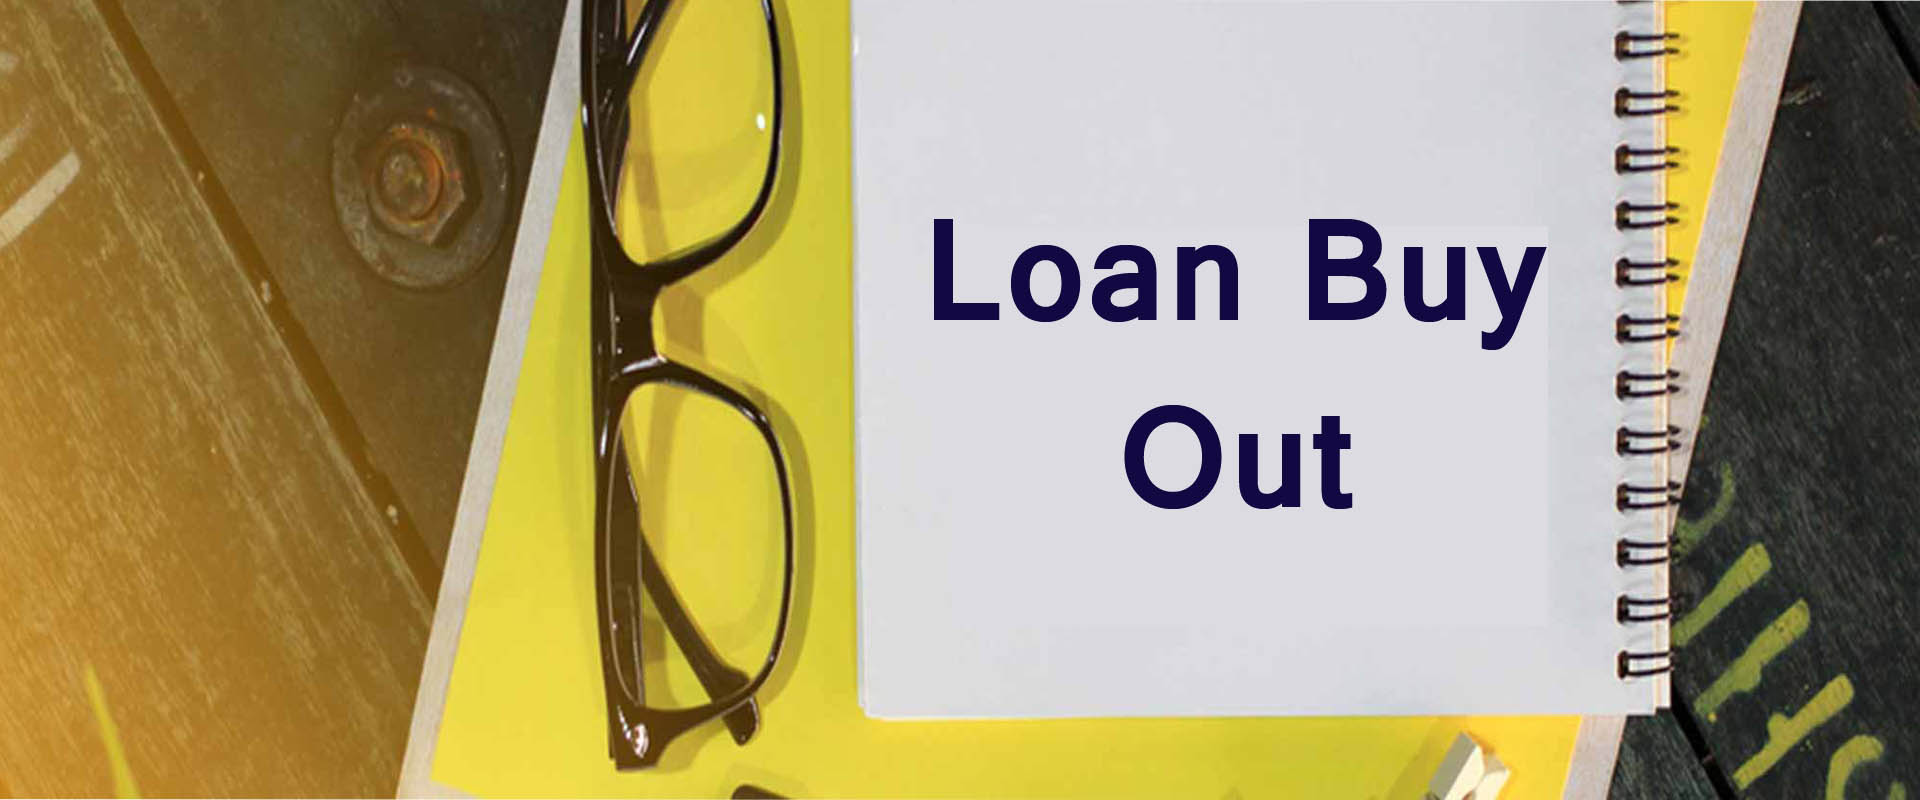 Loan Buy Out